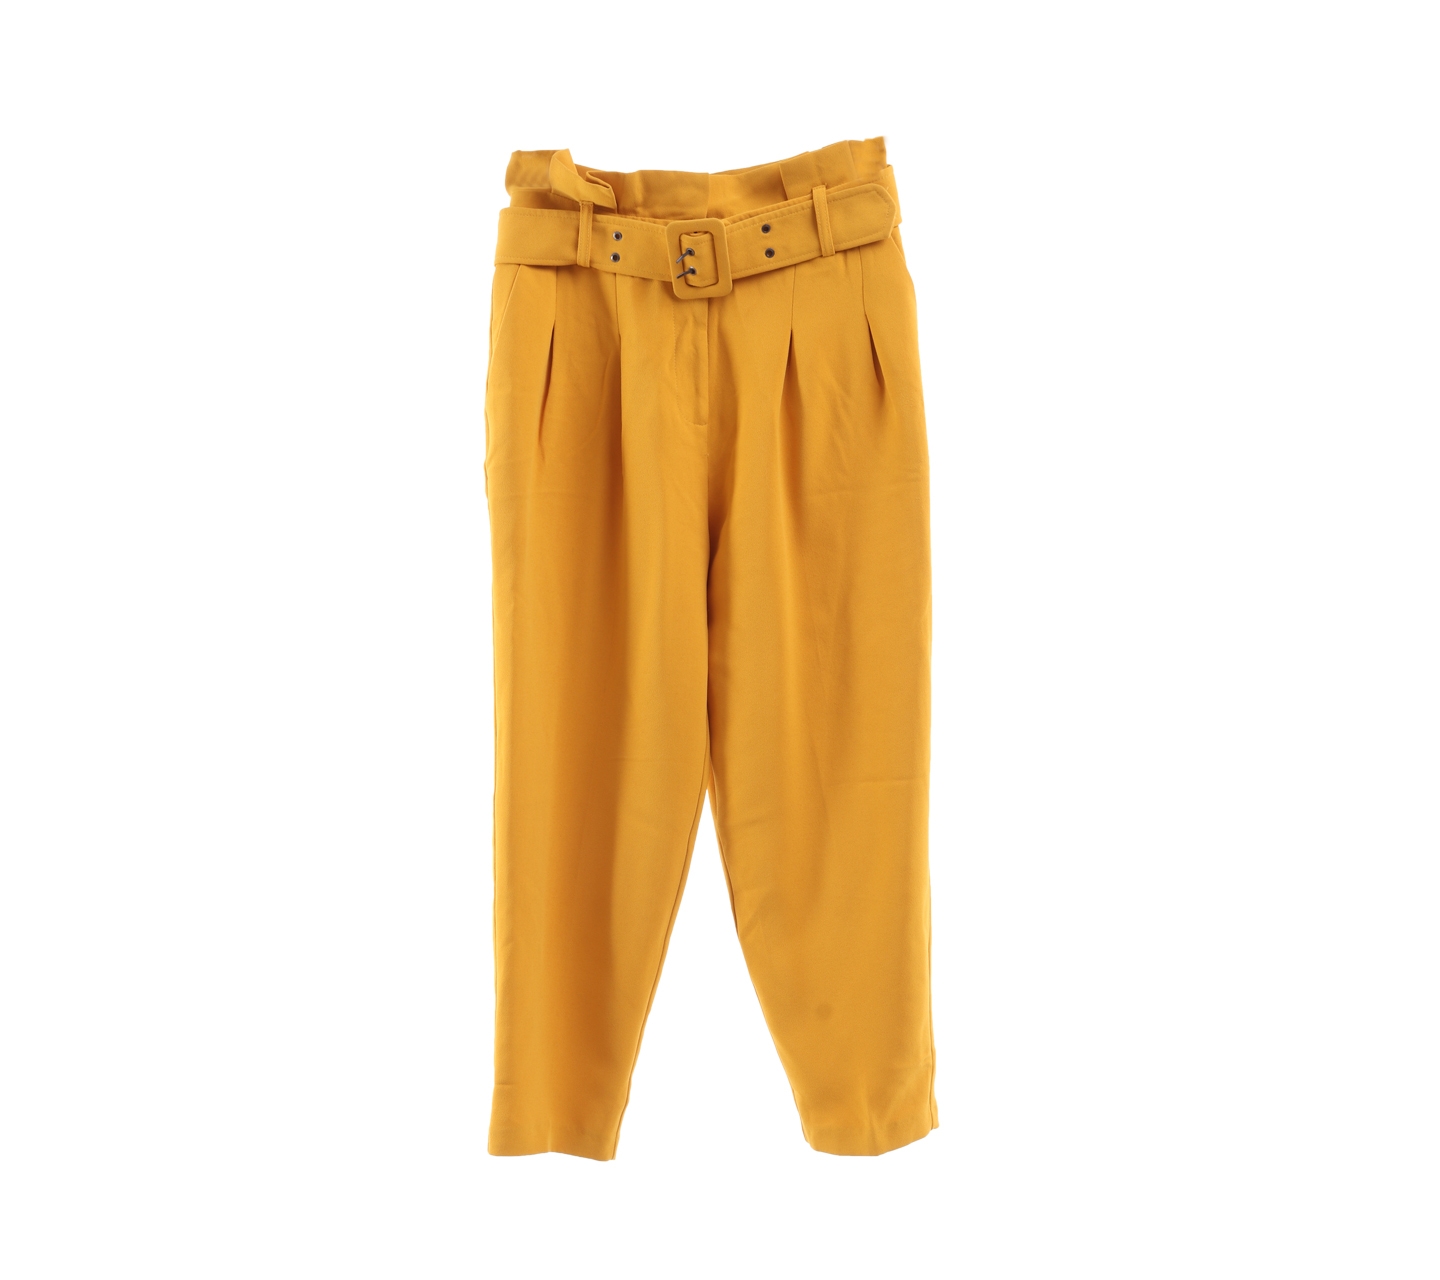 Topshop mustard long pants